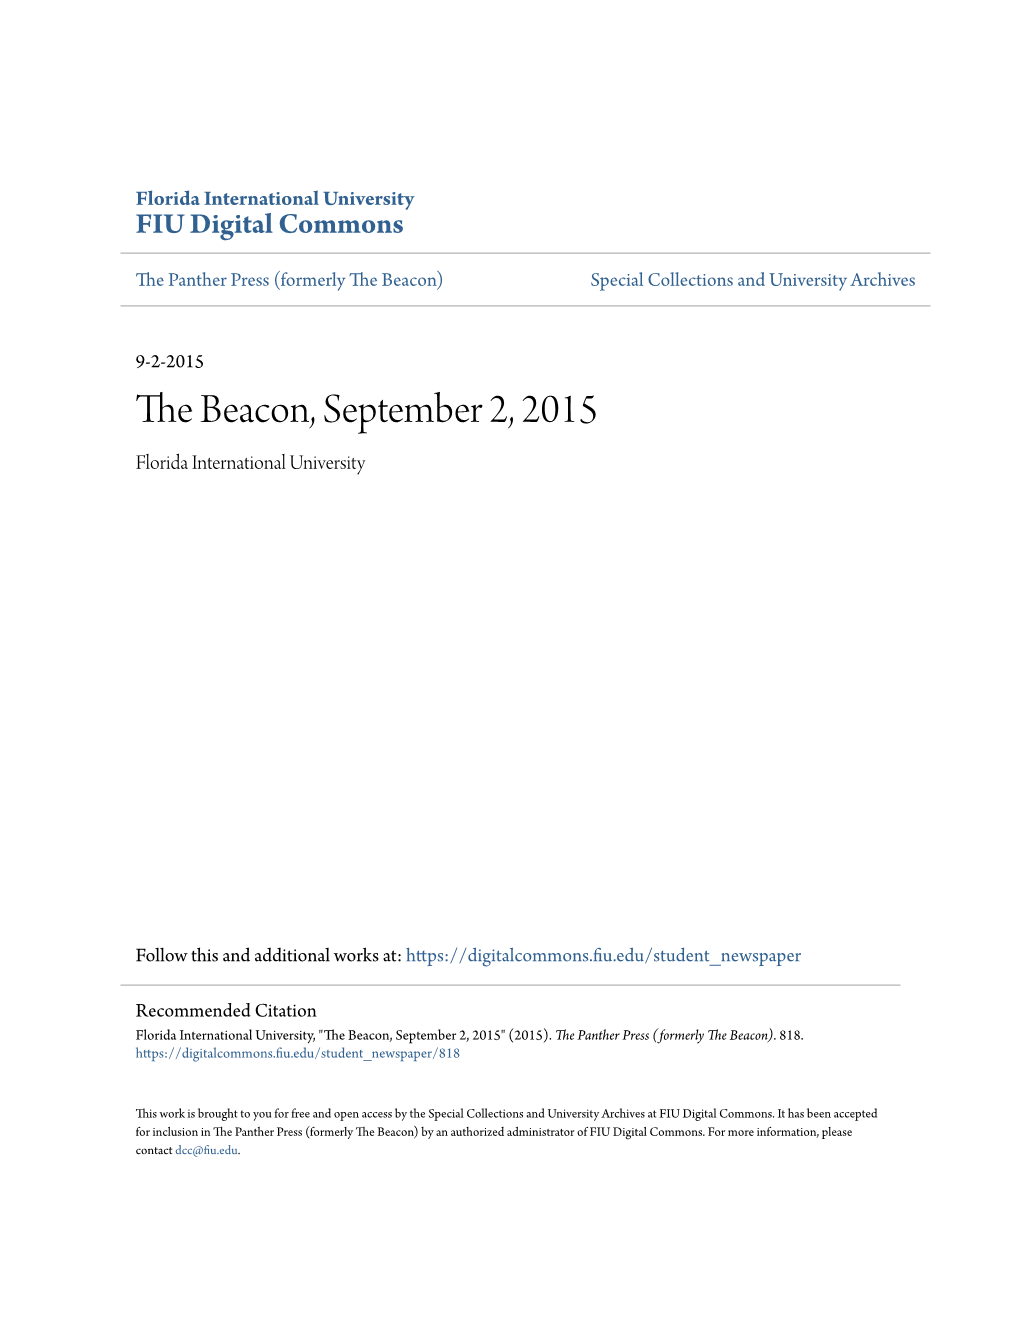 The Beacon, September 2, 2015 Florida International University